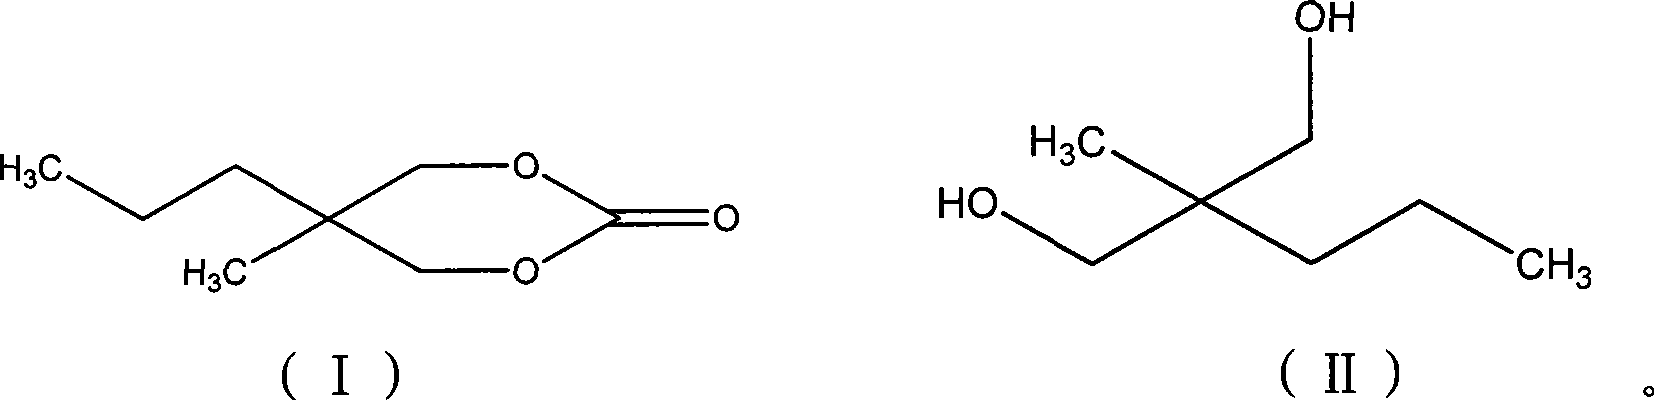 Method for synthesizing 2-methyl-2-propyl-1,3-propanediol dimethyl carbonate compound